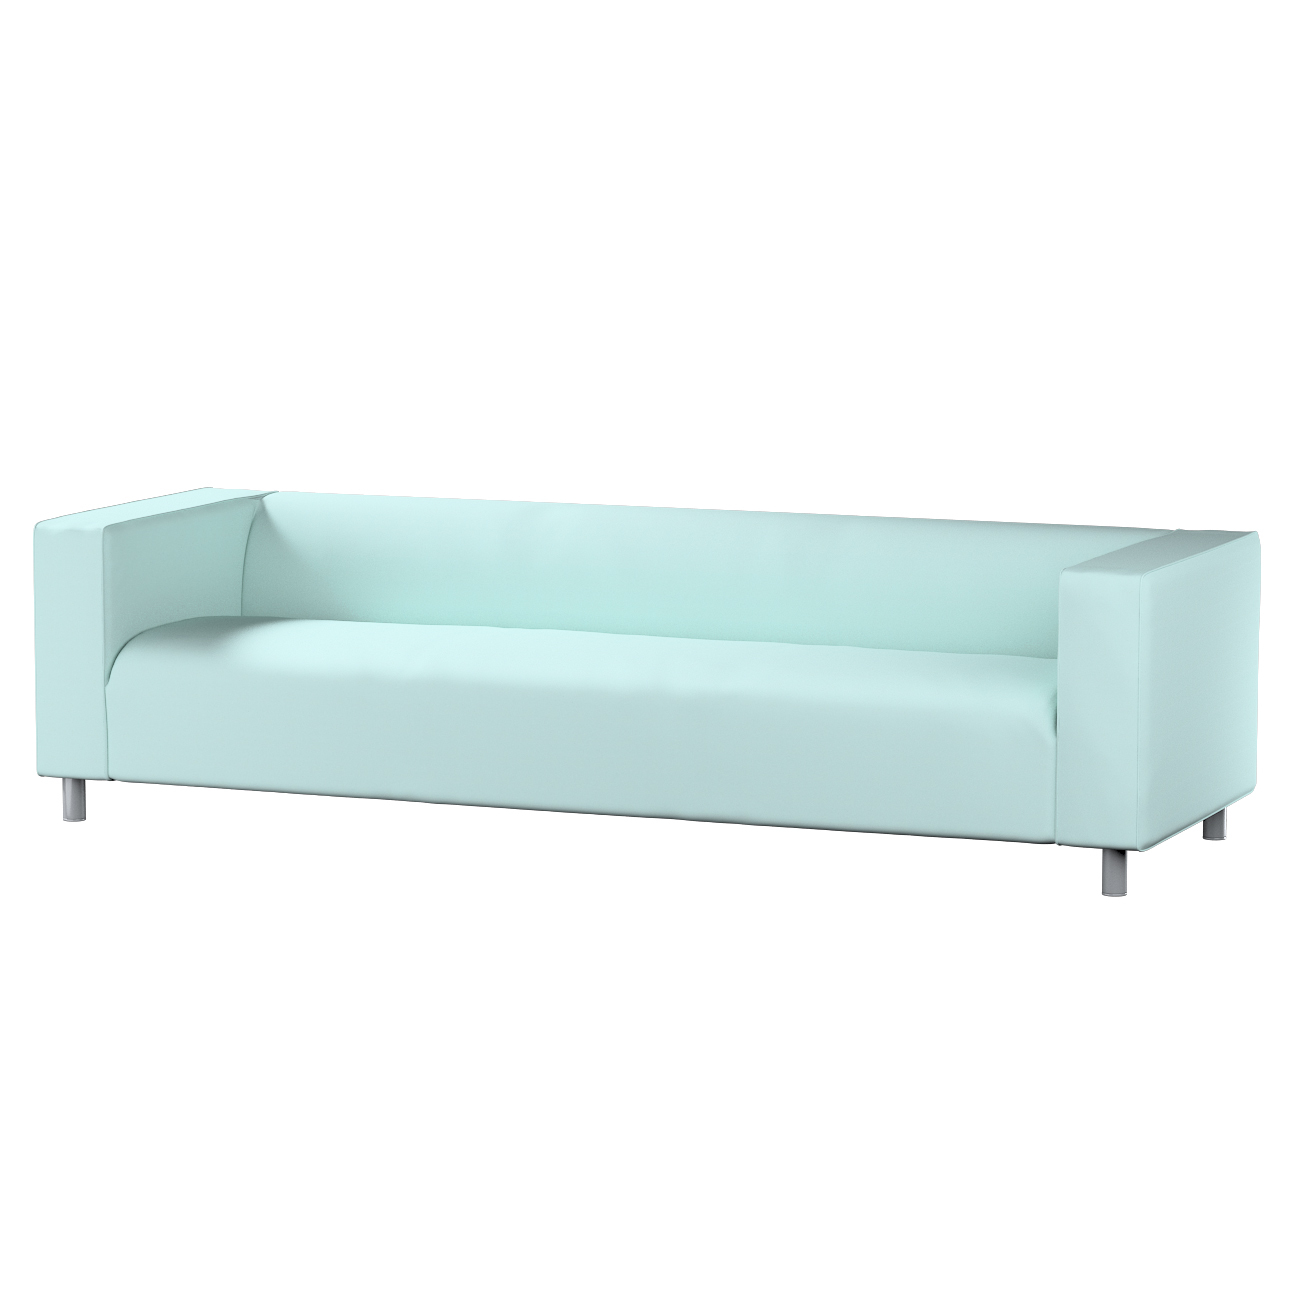 Bezug für Klippan 4-Sitzer Sofa, hellblau, Bezug für Klippan 4-Sitzer, Cott günstig online kaufen